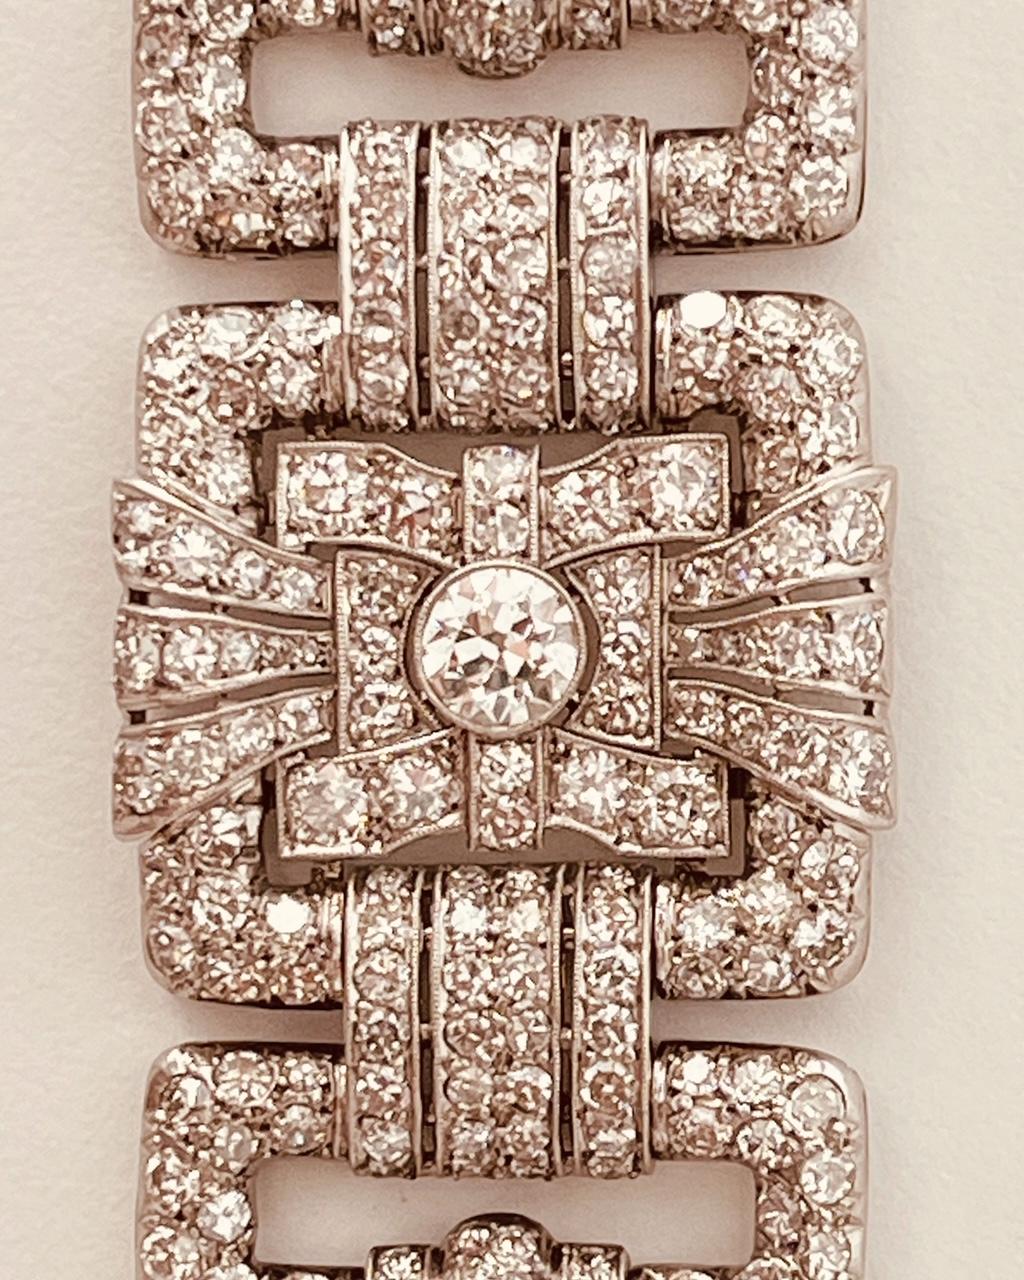 Brilliant Cut An Art Deco Diamond Bracelet Set Throughout With 25 Carats Diamonds. Circa 1930s For Sale